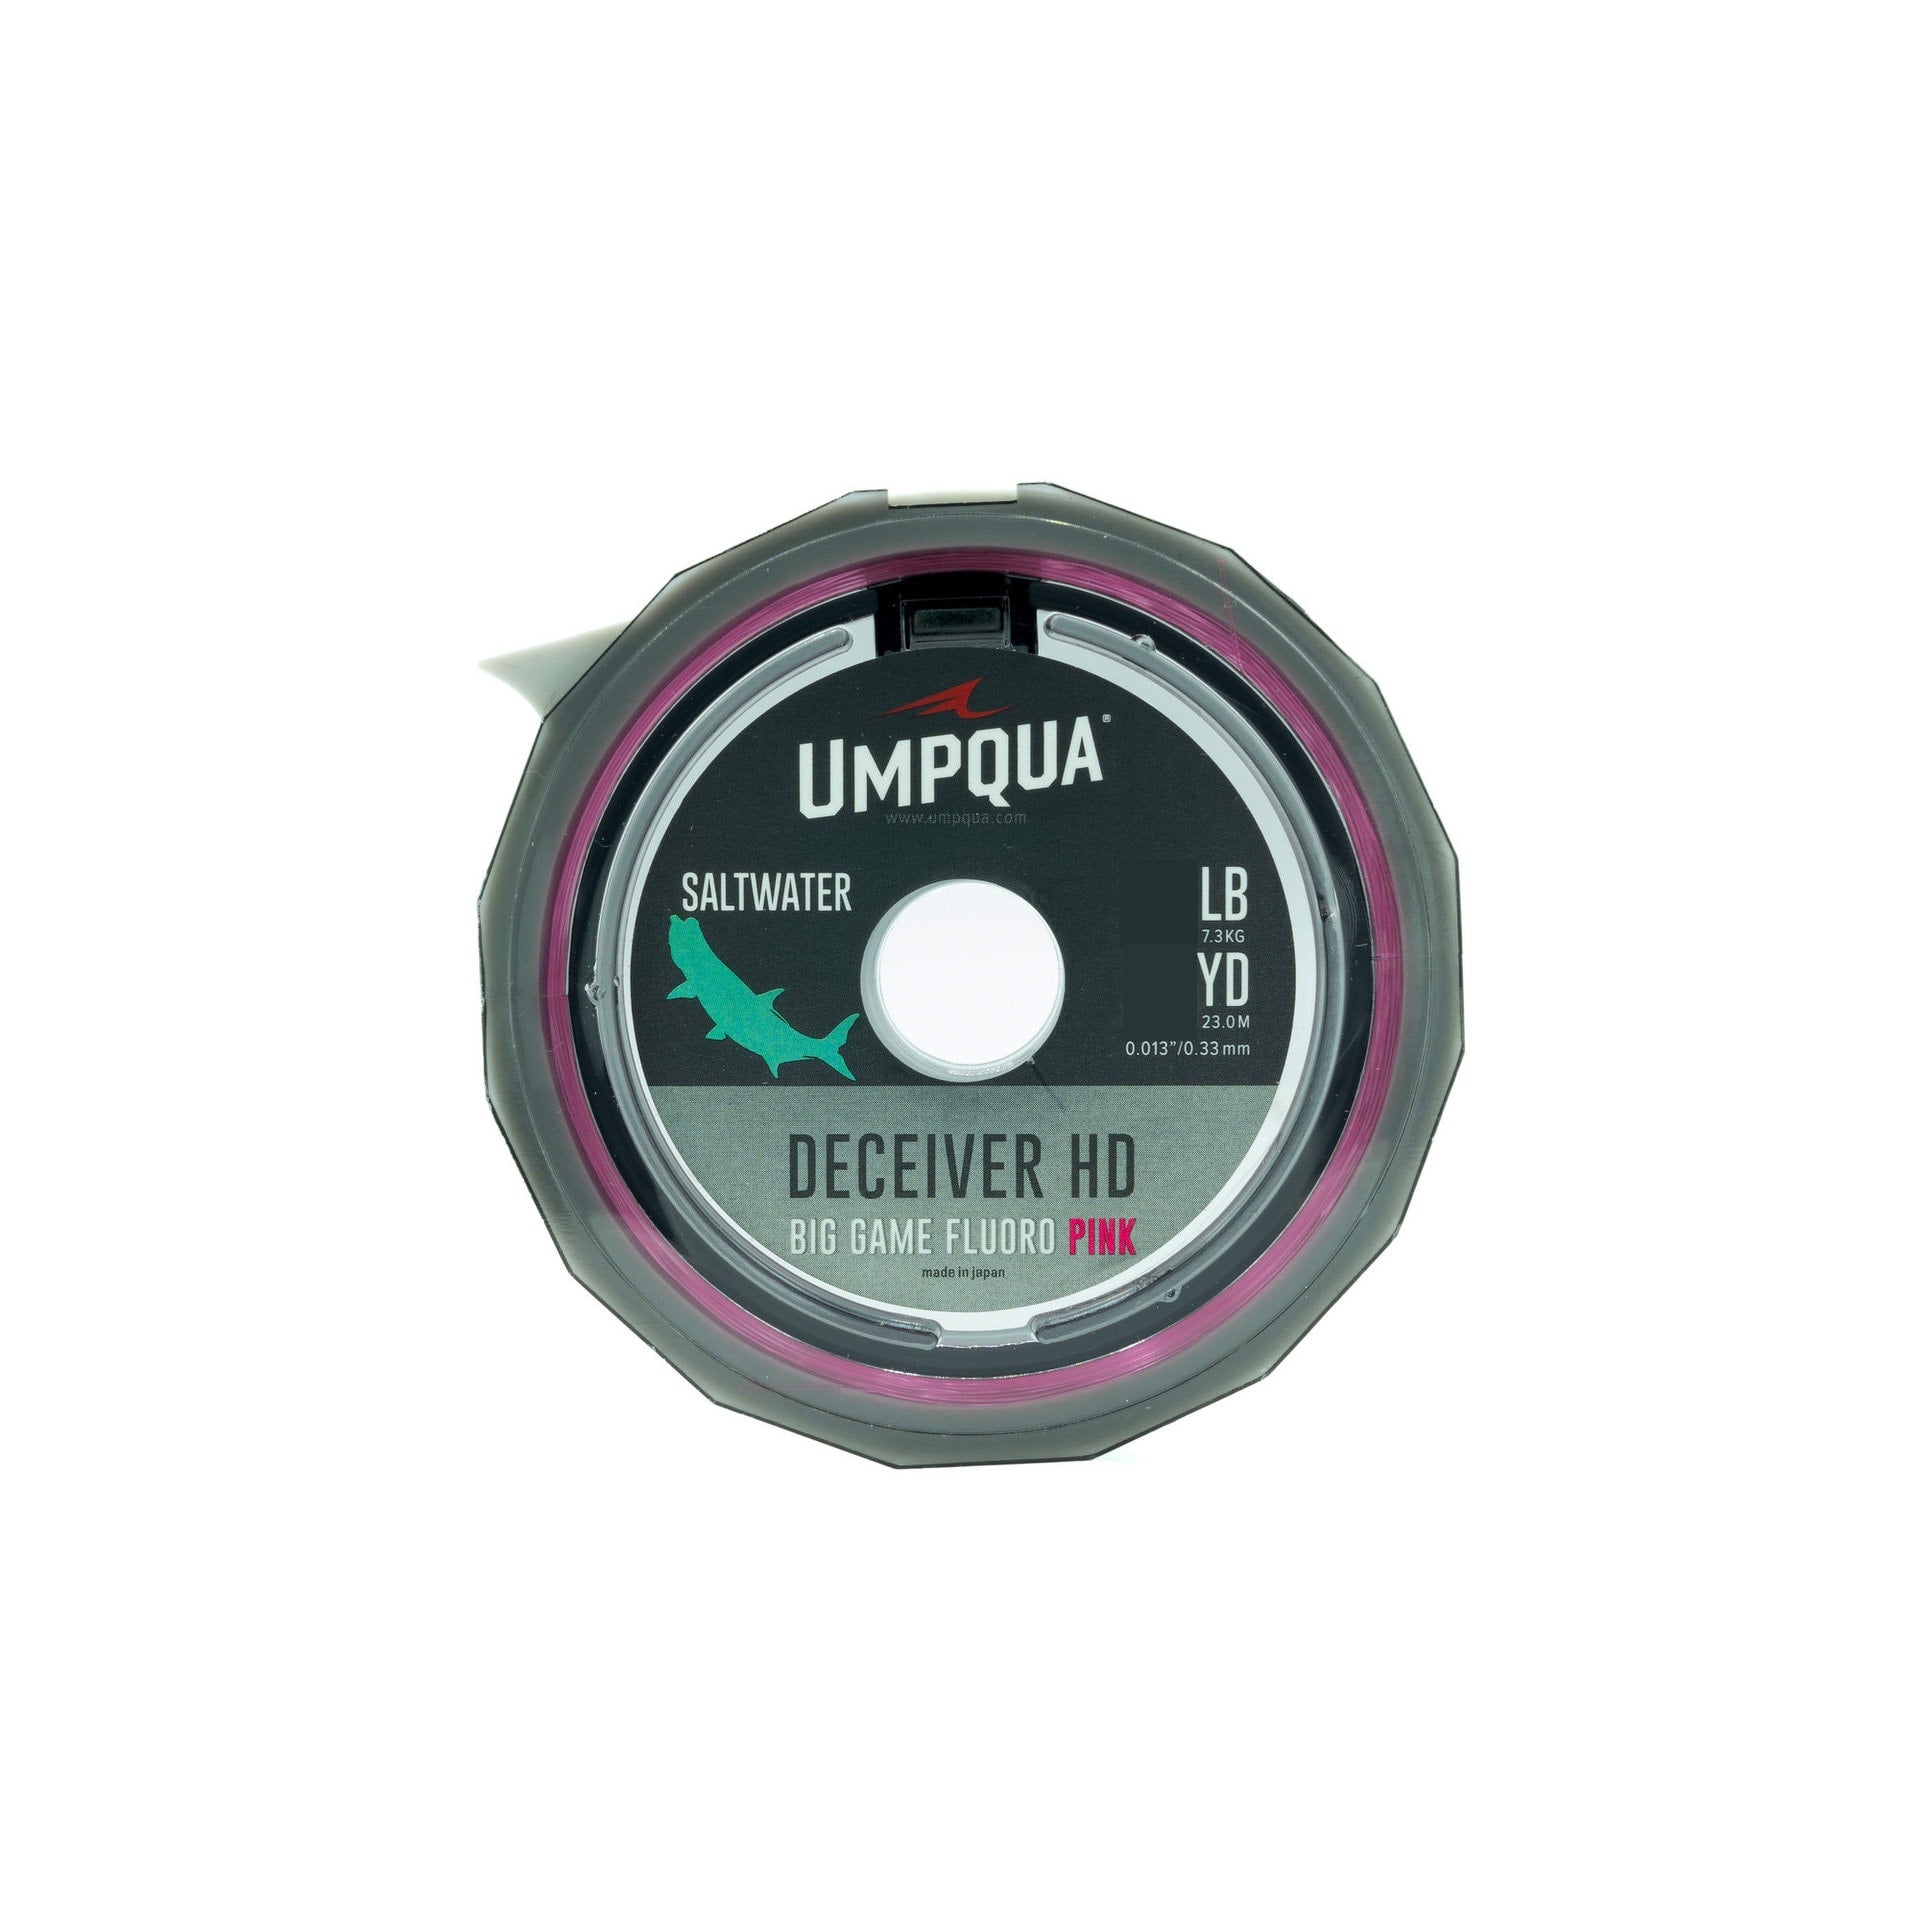 Umpqua Deceiver HD Saltwater Fluorocarbon Shock Tippet